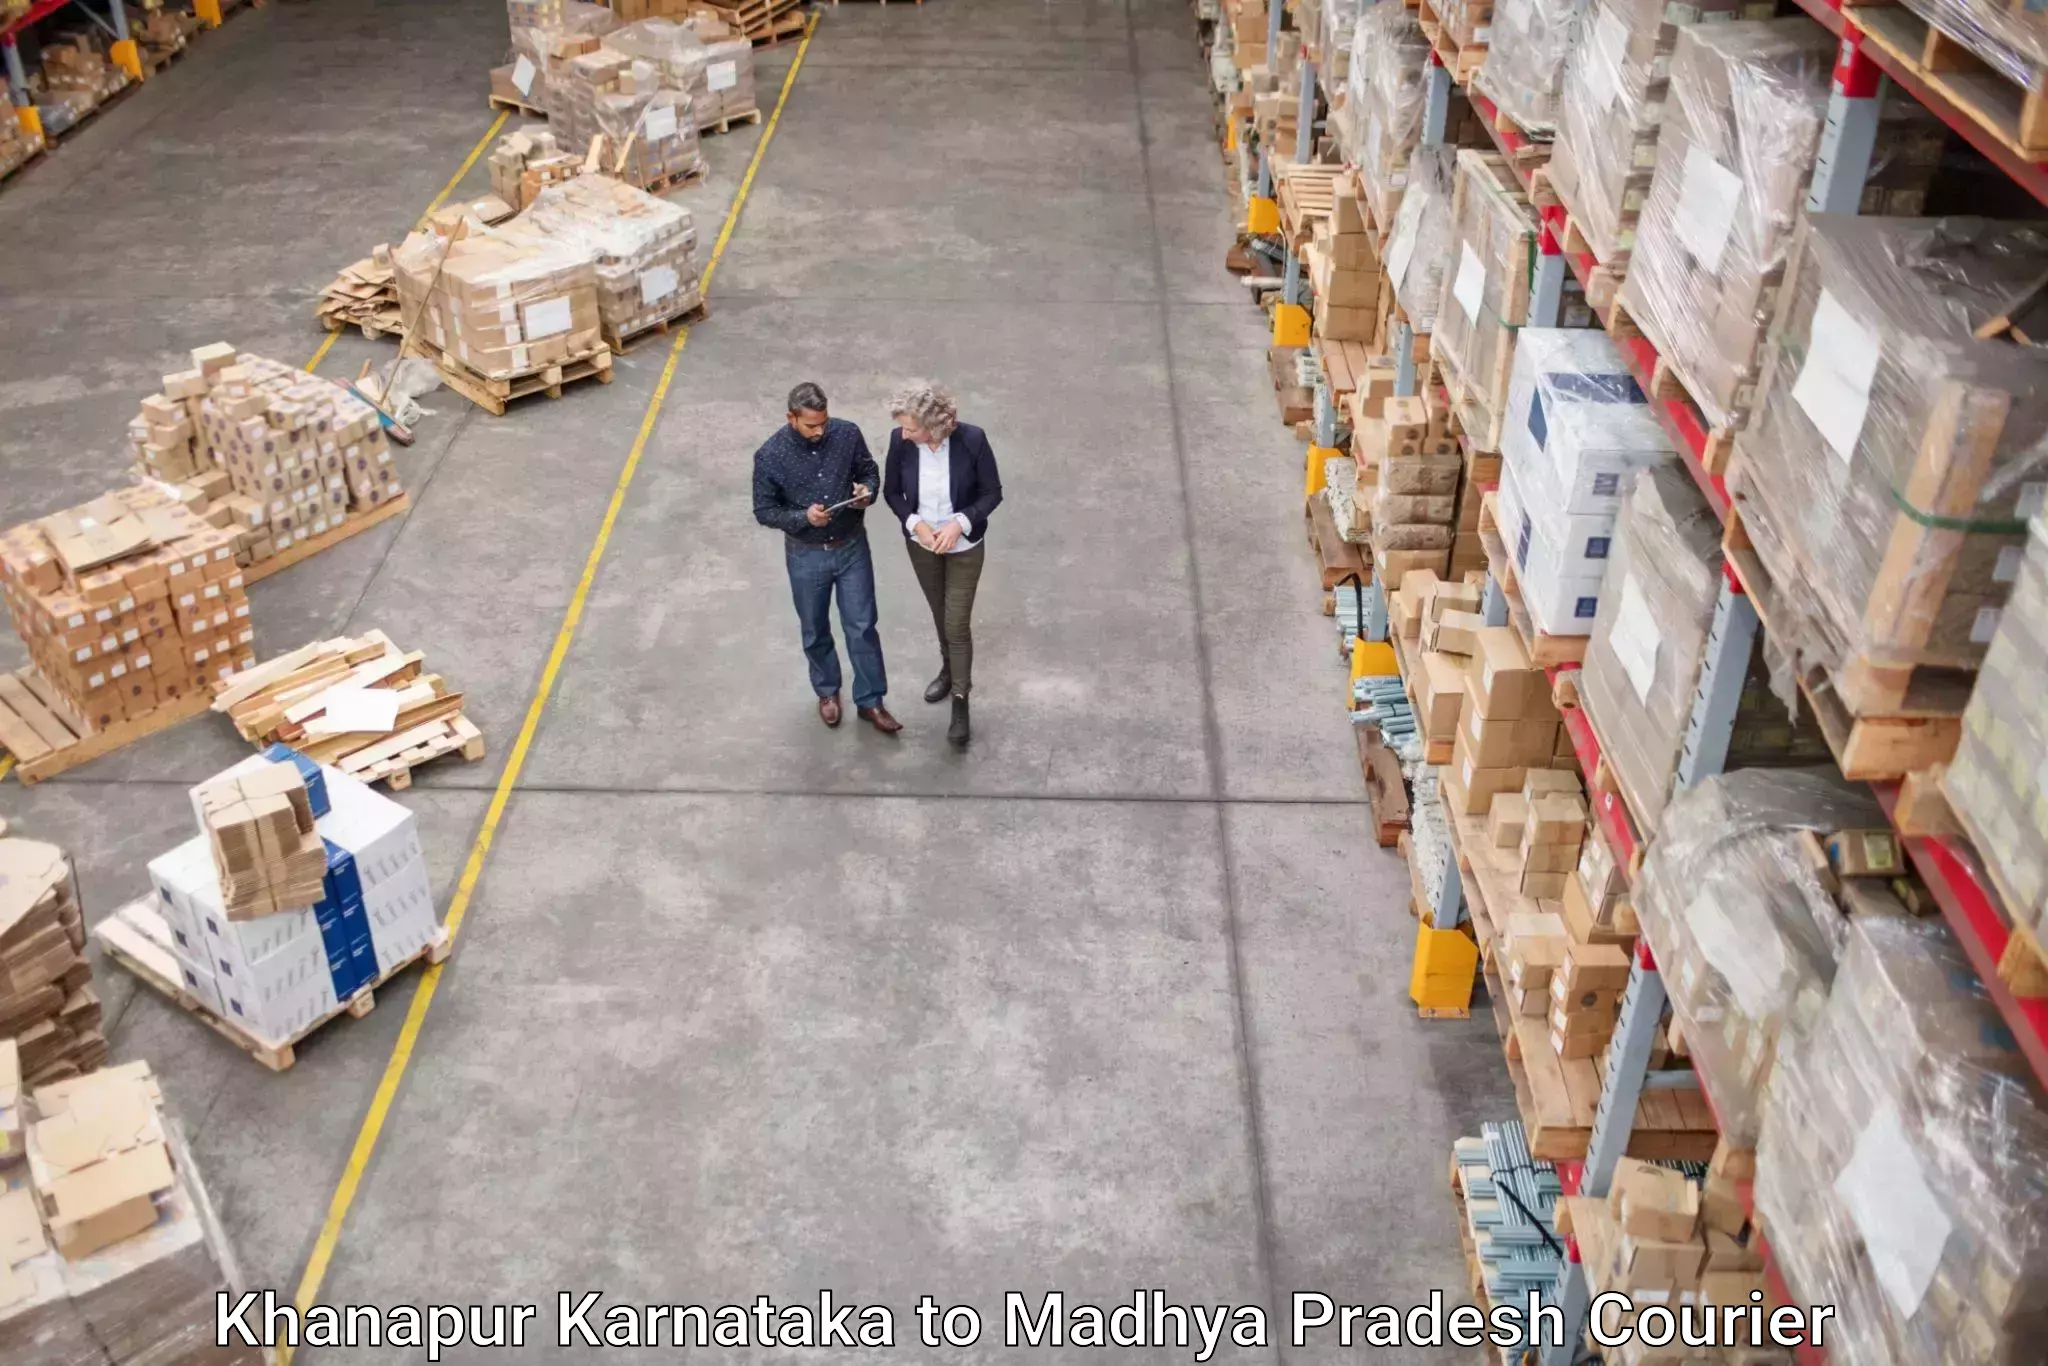 Courier service efficiency Khanapur Karnataka to Khurai